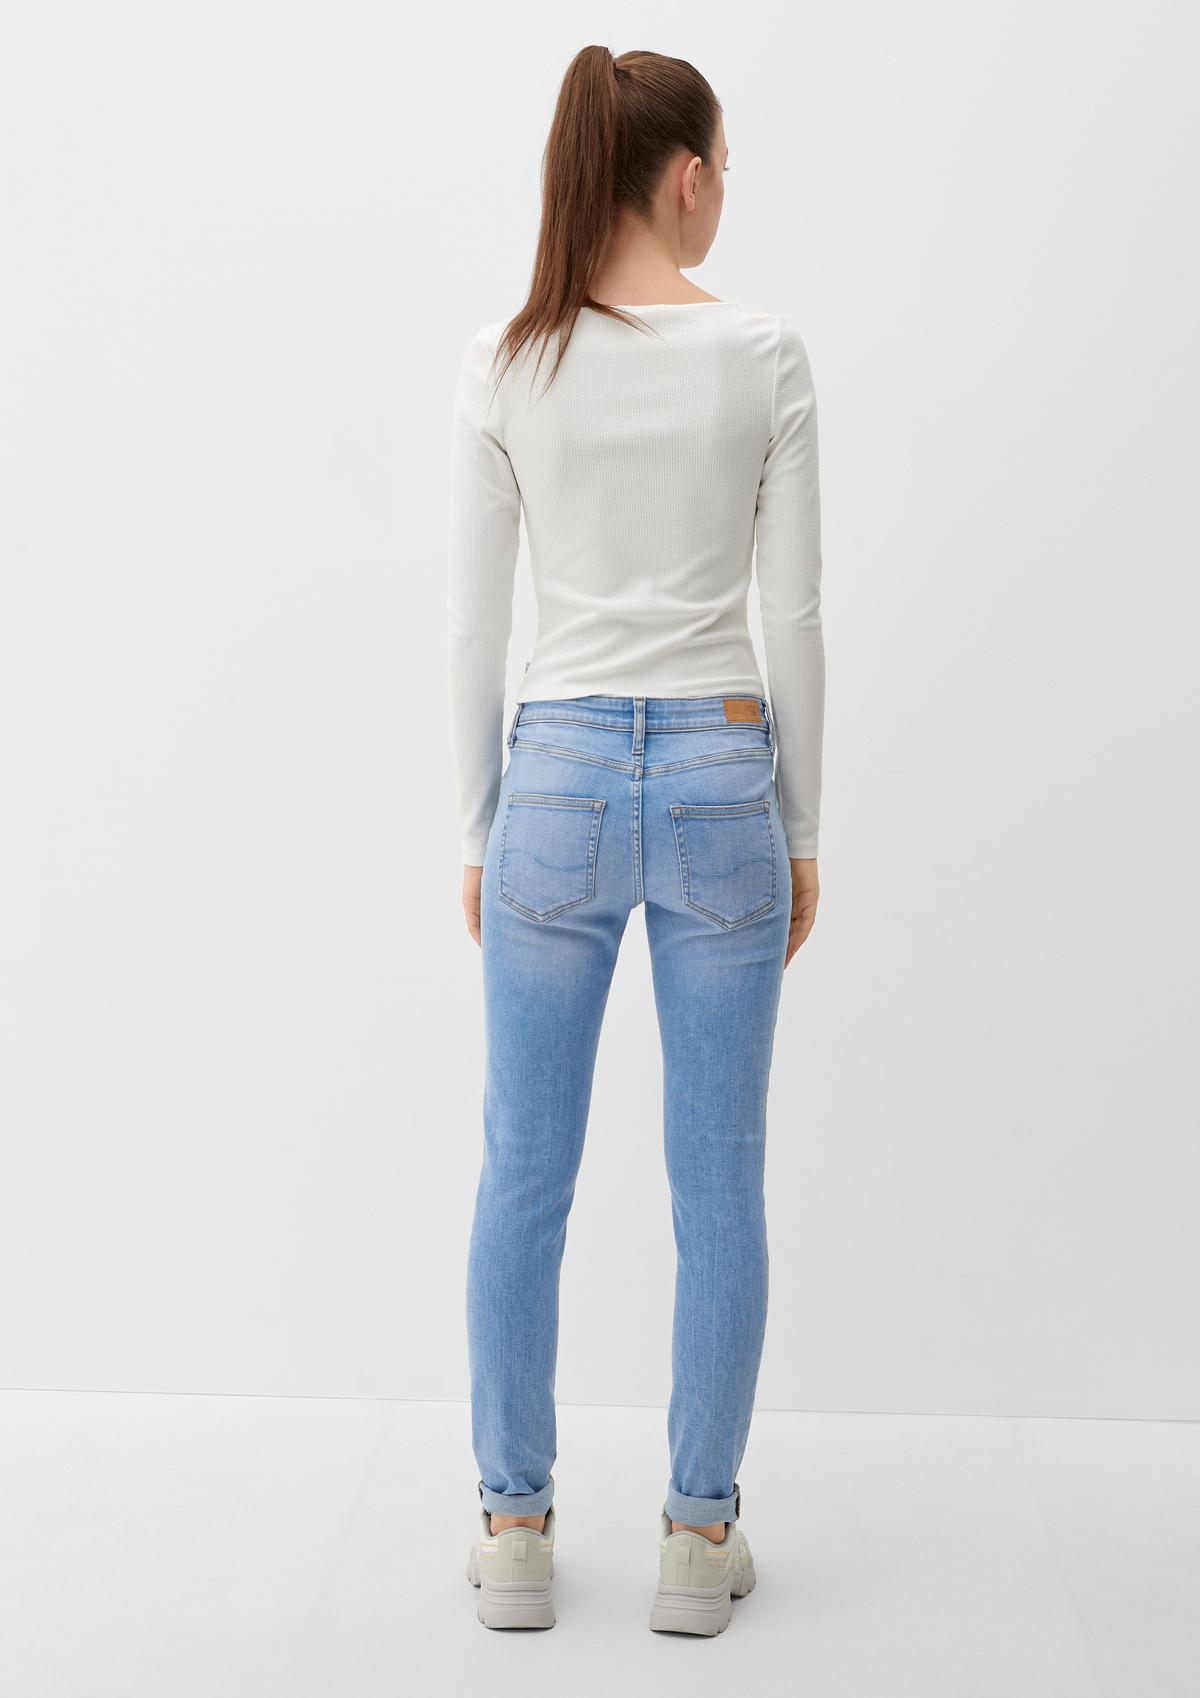 s.Oliver Sadie jeans / skinny fit / mid rise / skinny leg